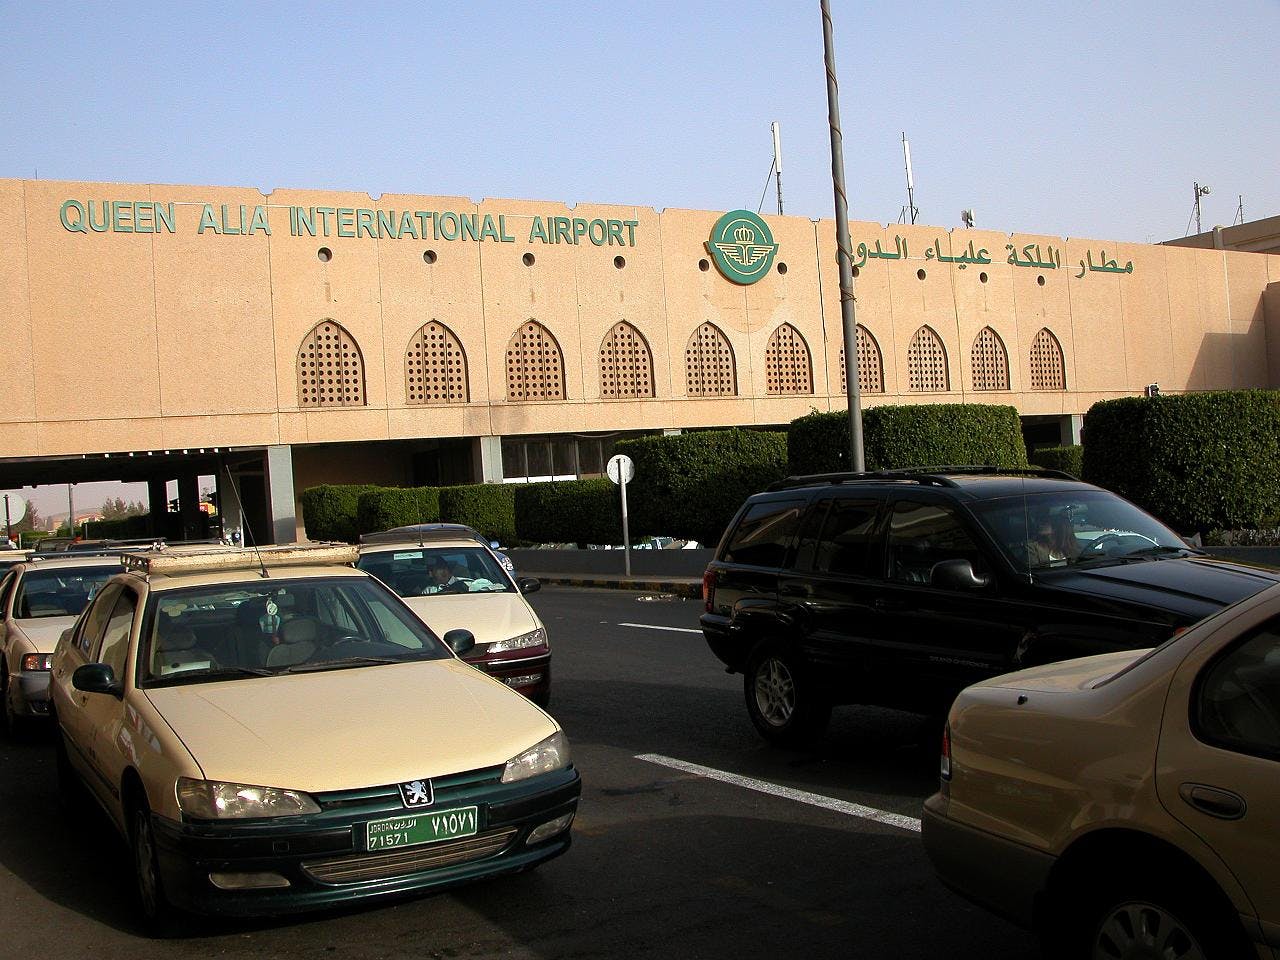 The old Queen Alia International Airport building.